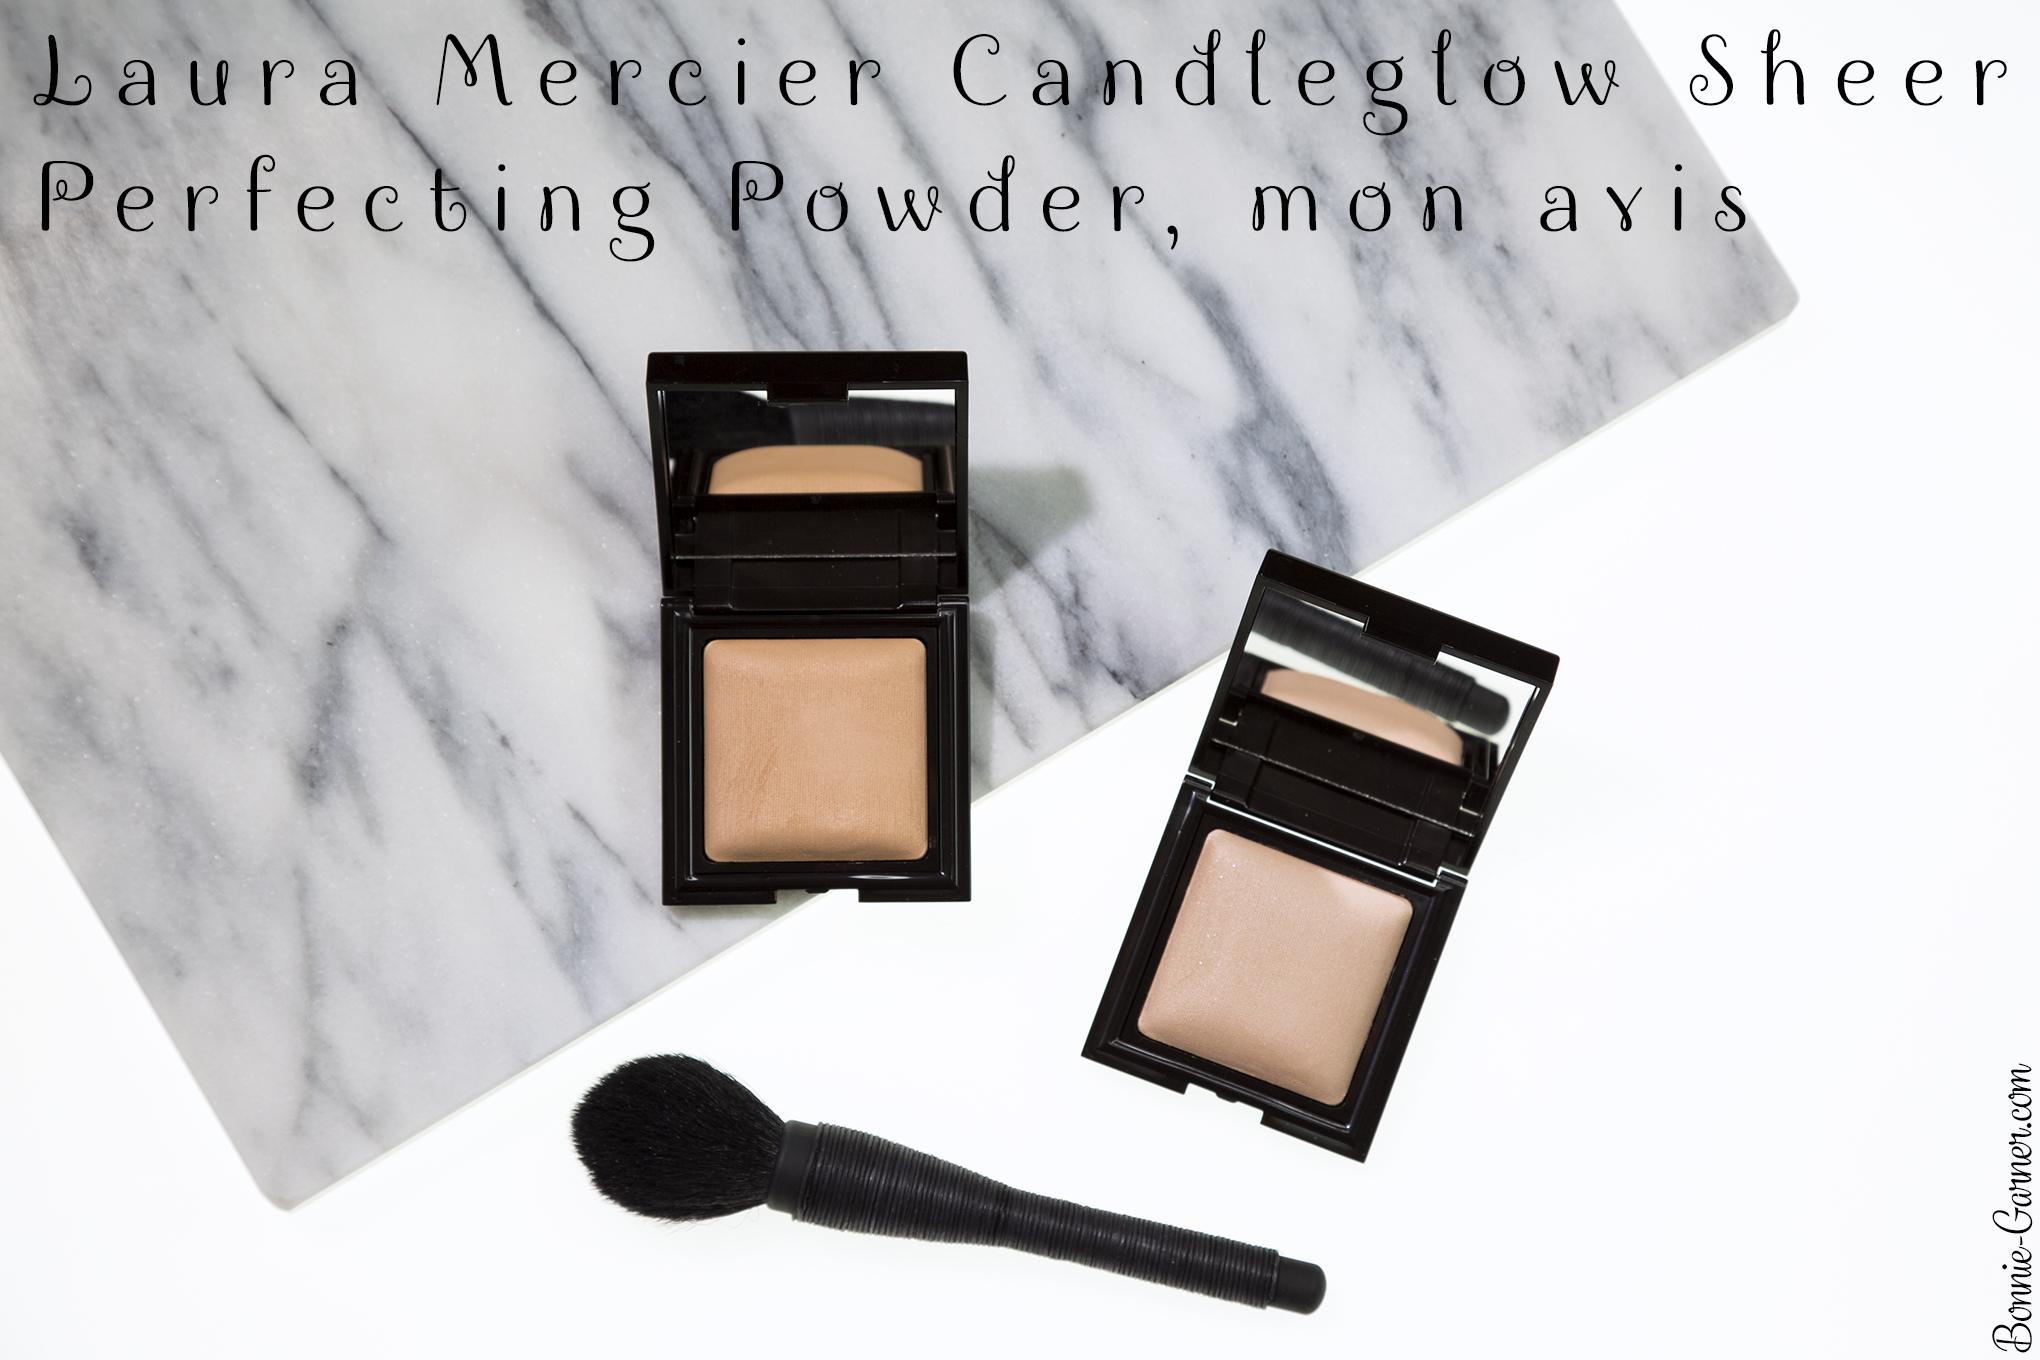 Laura Mercier Candleglow Sheer Perfecting Powder, mon avis